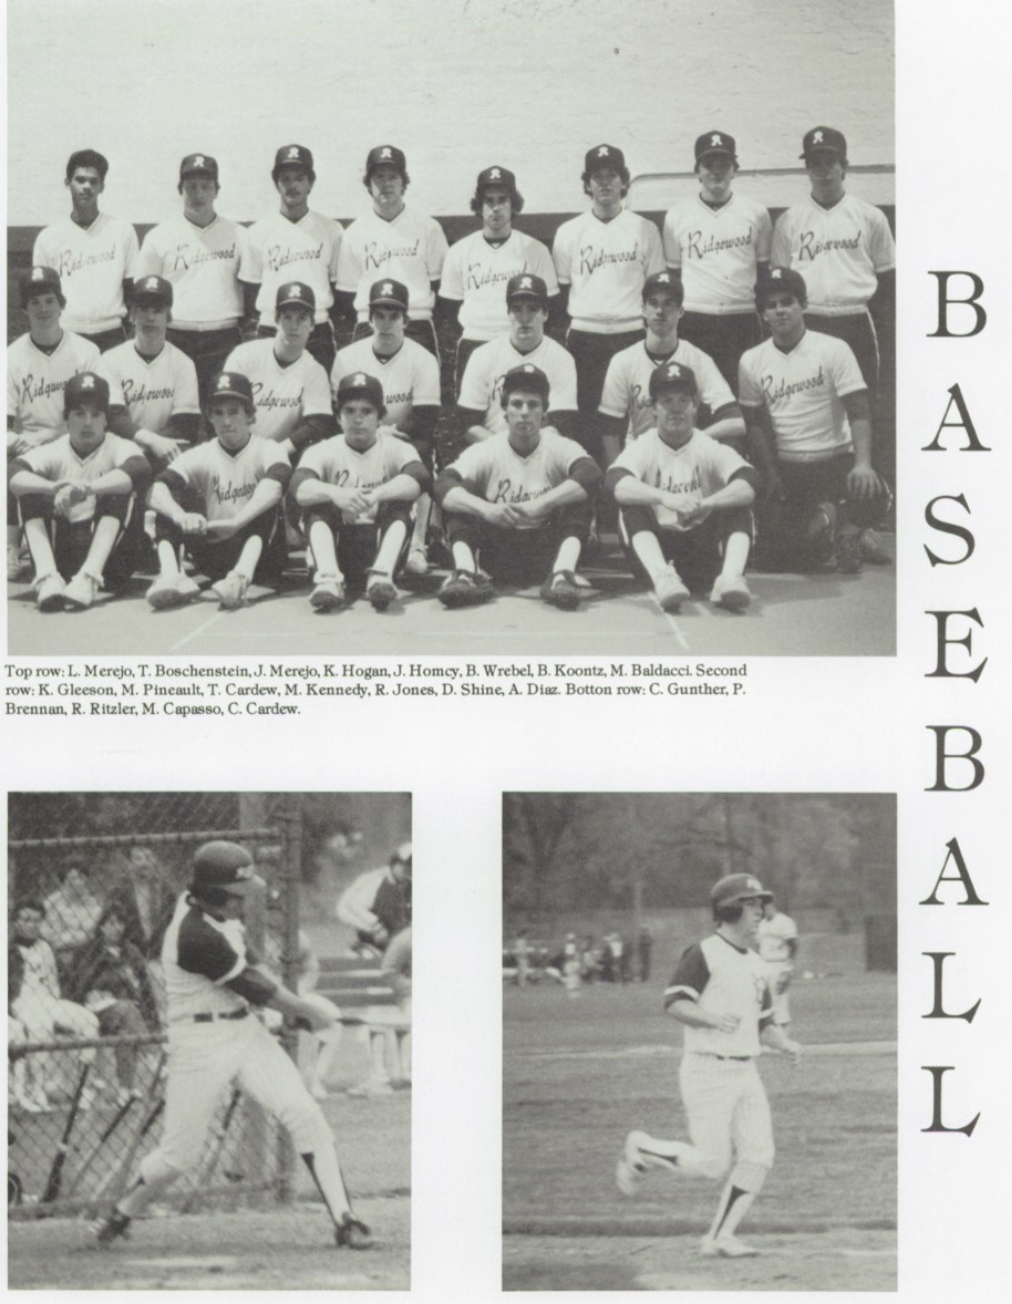 1984 Boys’ Baseball Team